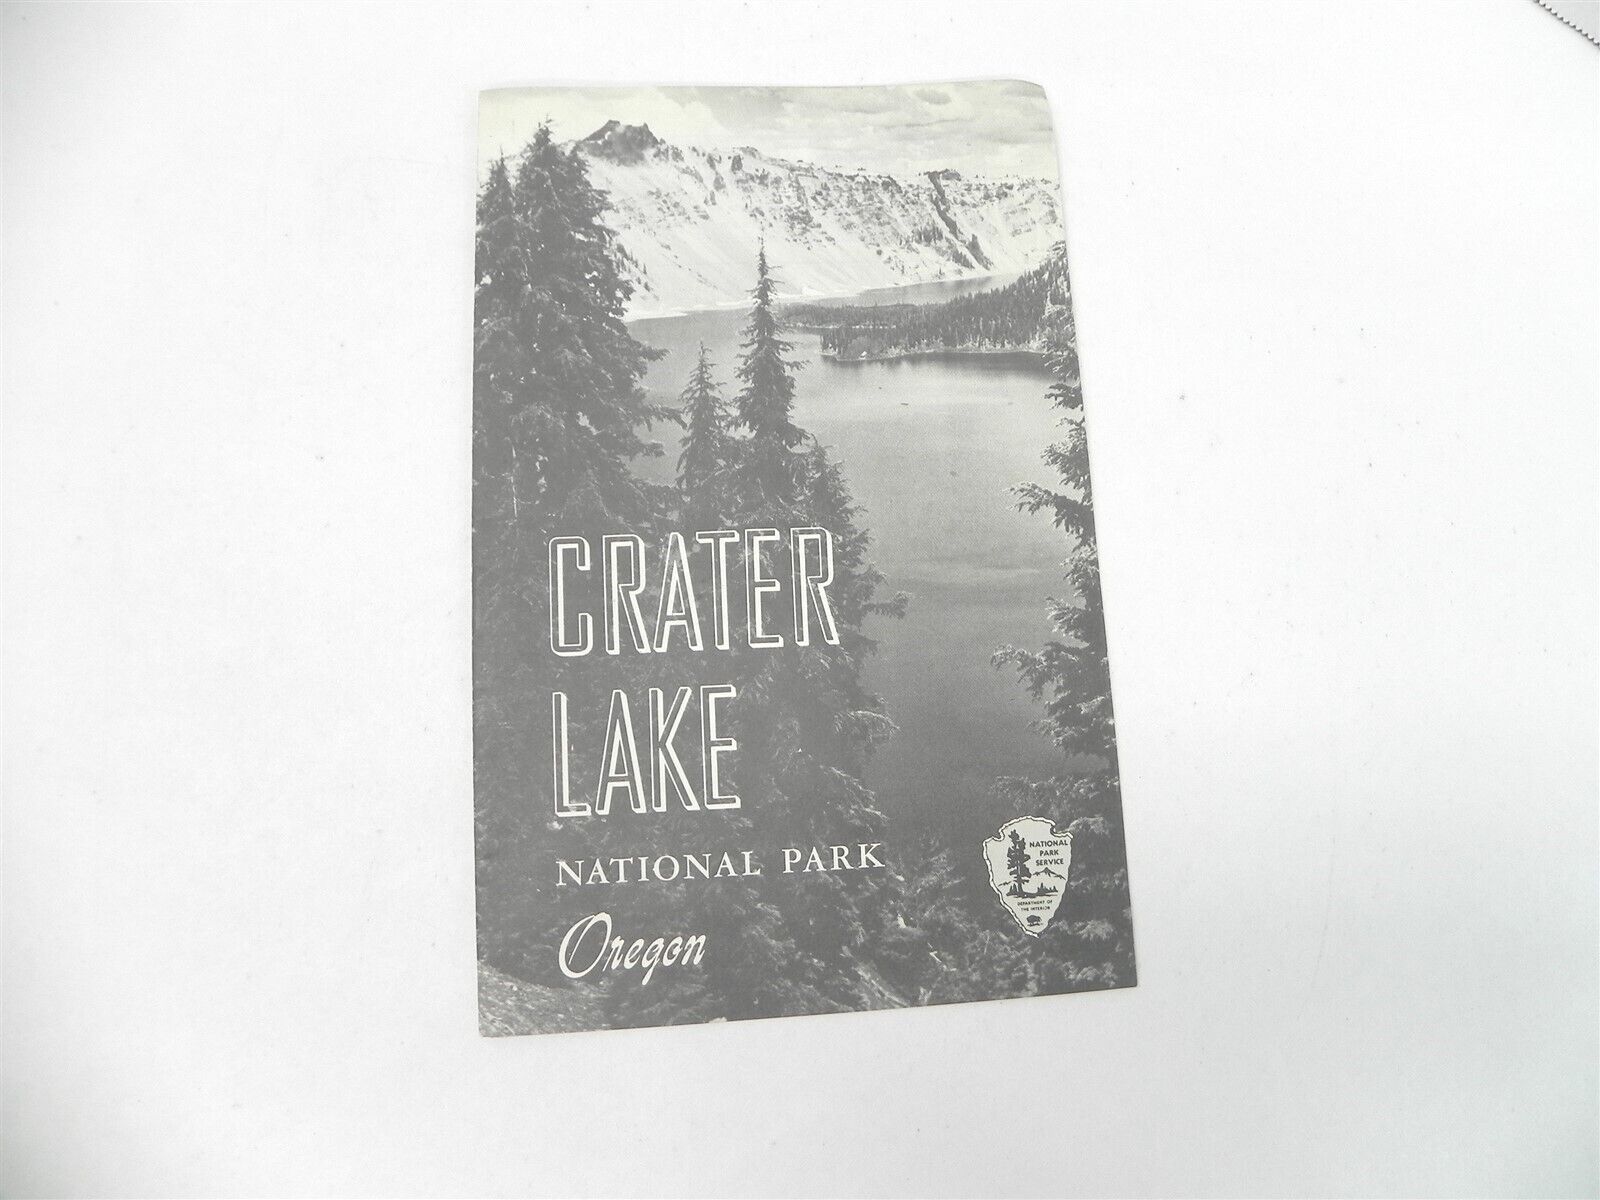  VINTAGE 1954 CRATER LAKE NATIONAL PARK SERVICE MAP TOURISM GUIDE BOOK OREGON 